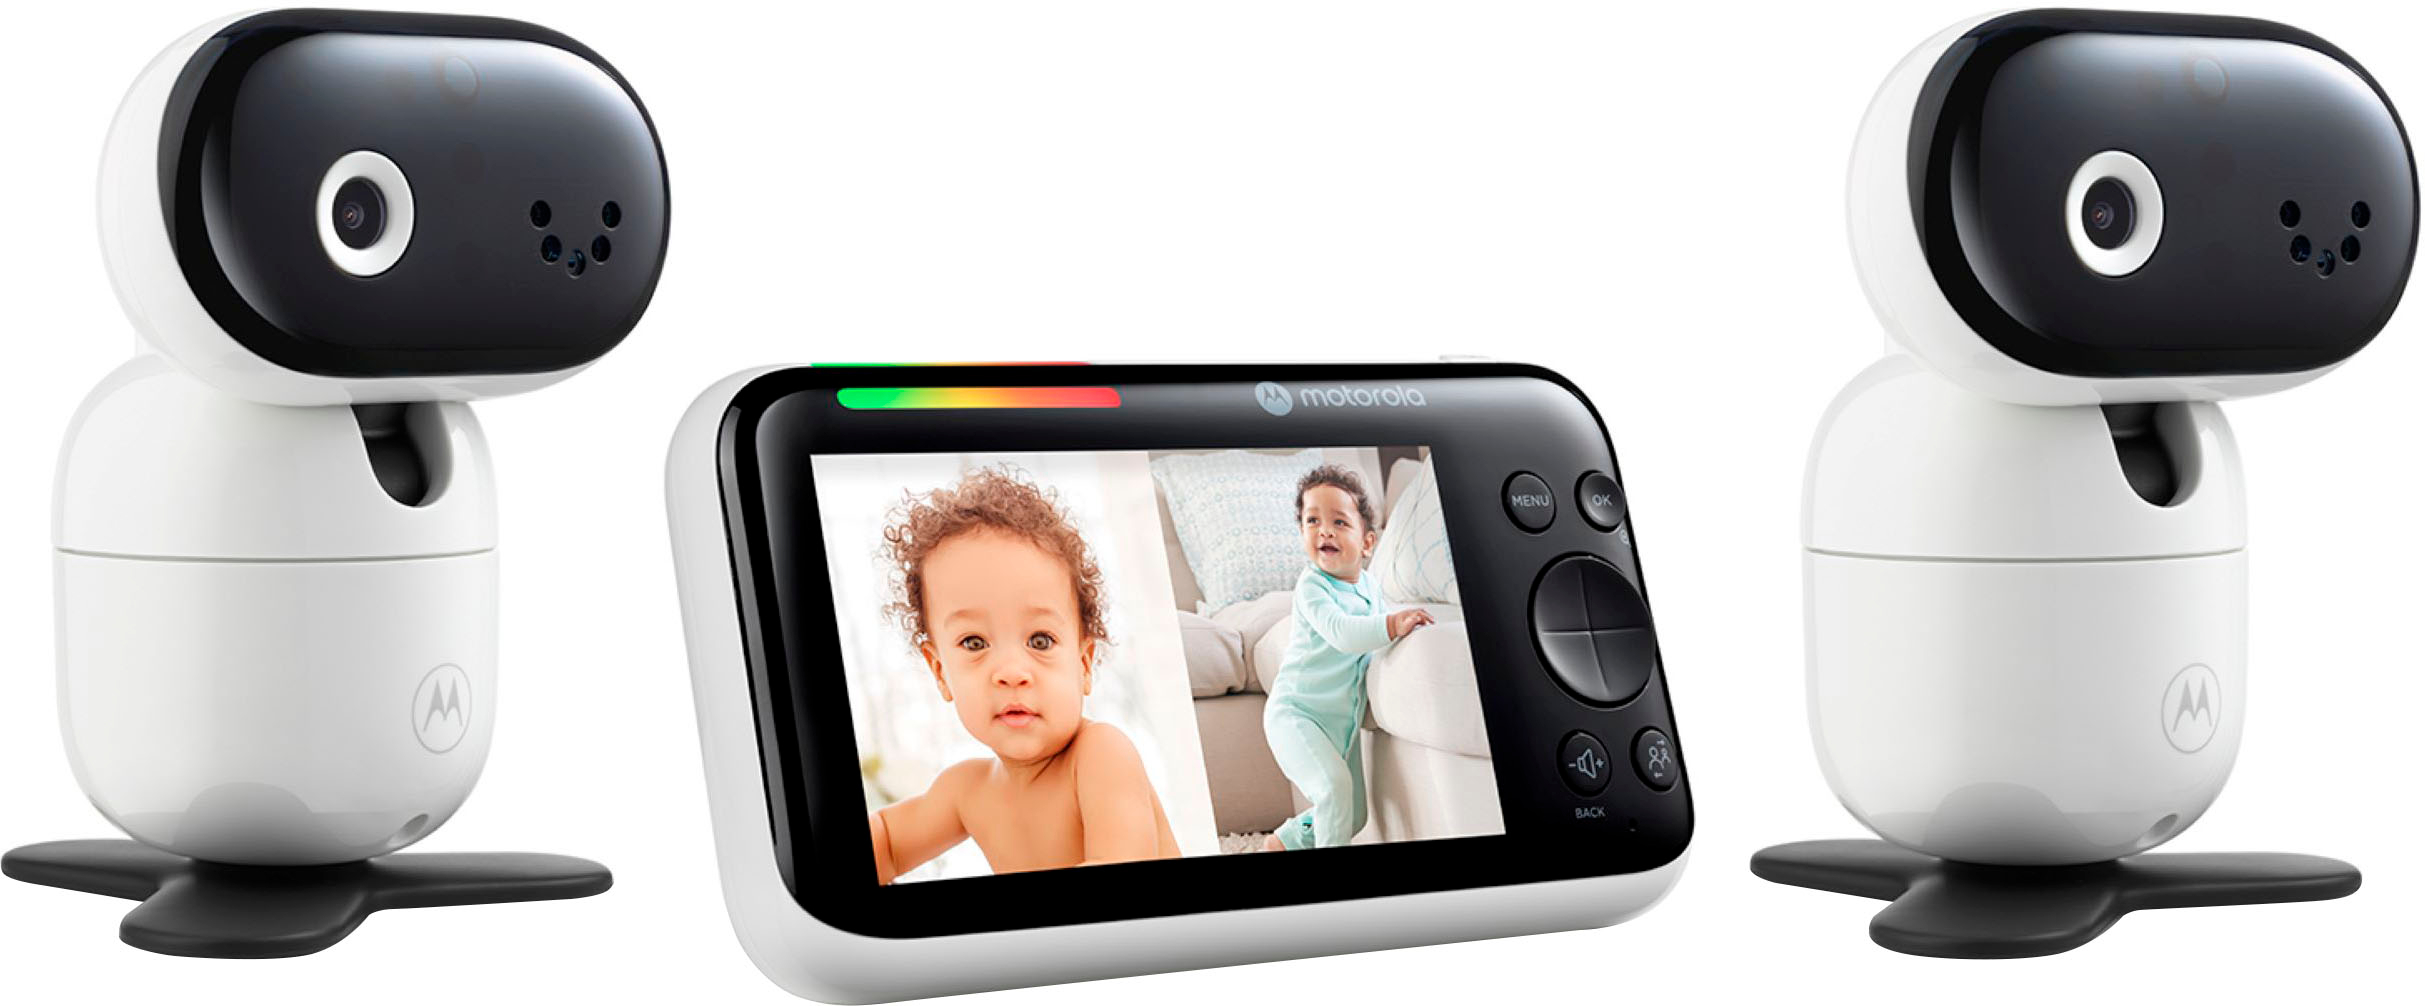 Babyphone Camera Monitor, Babyphone Video 2 Cameras